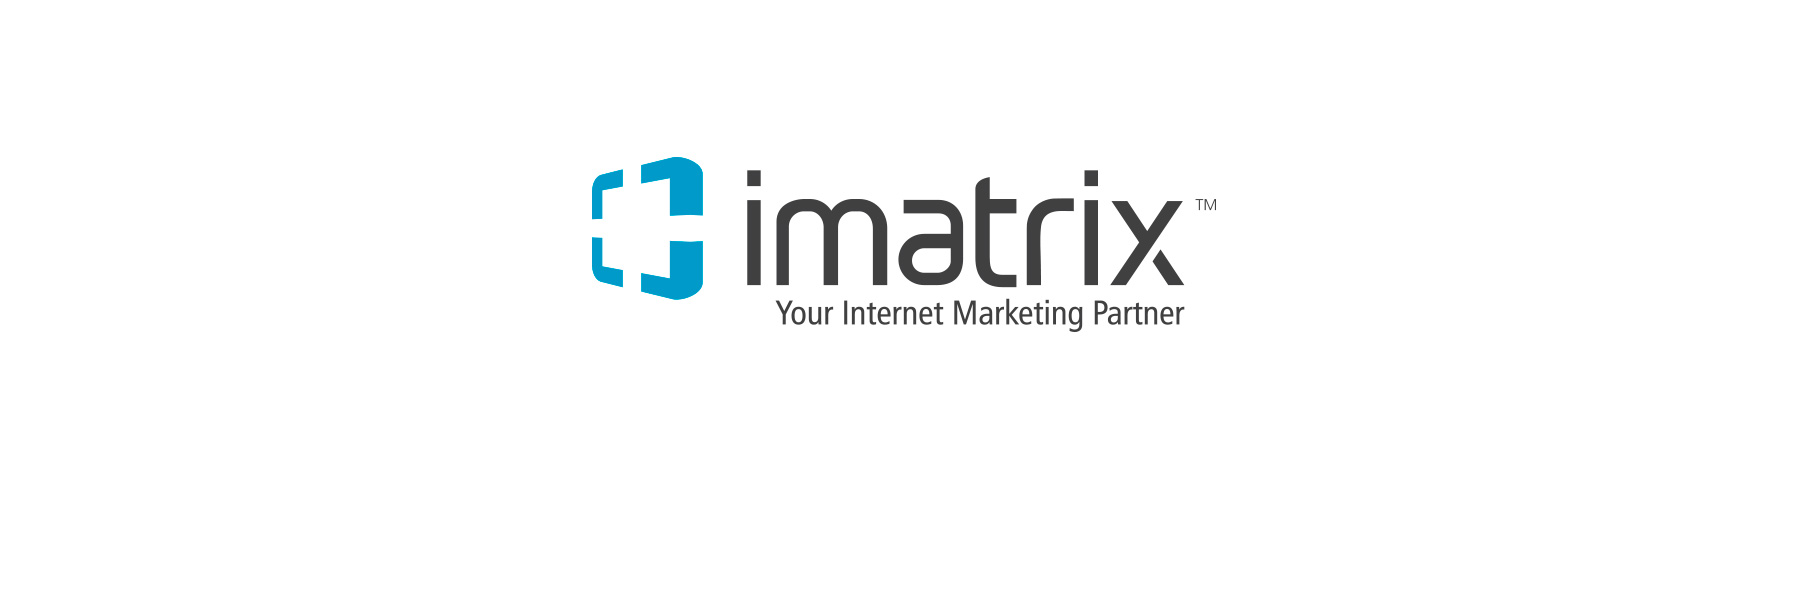 The Mission Statement for iMatrix Digital Marketing Company